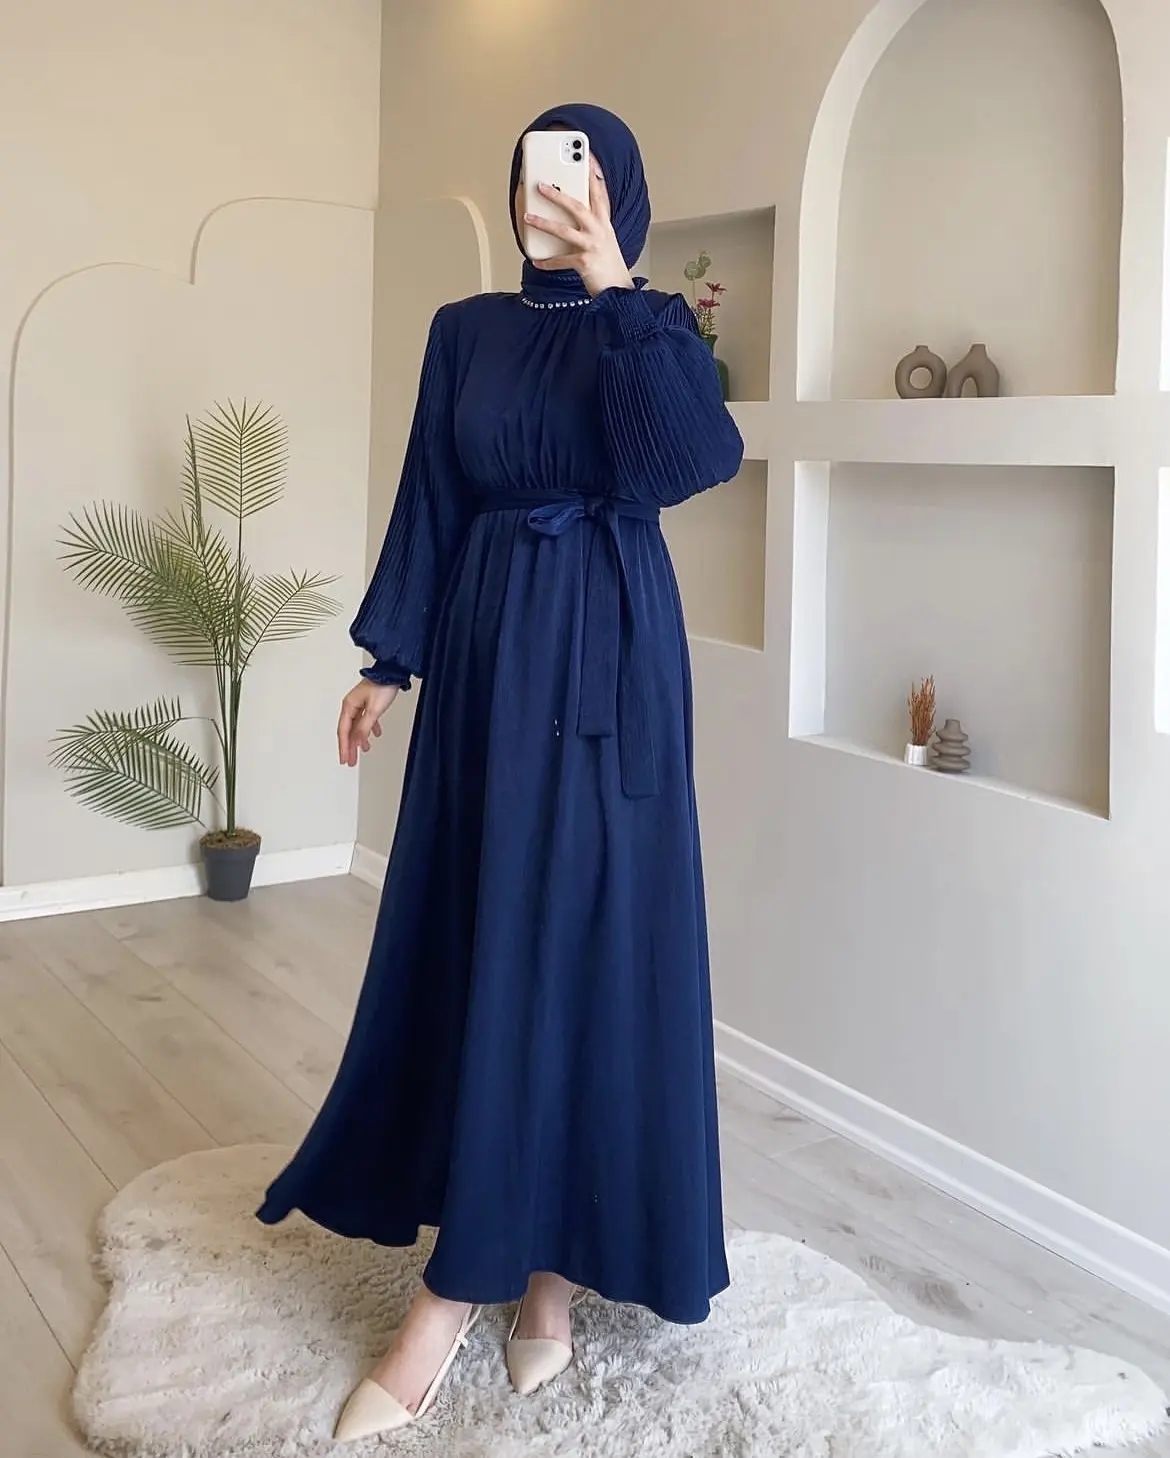 Gaun Muslim Abaya wanita elegan bergaya baru gaun panjang kasual kerah berdiri Solid berlian lipit bertali